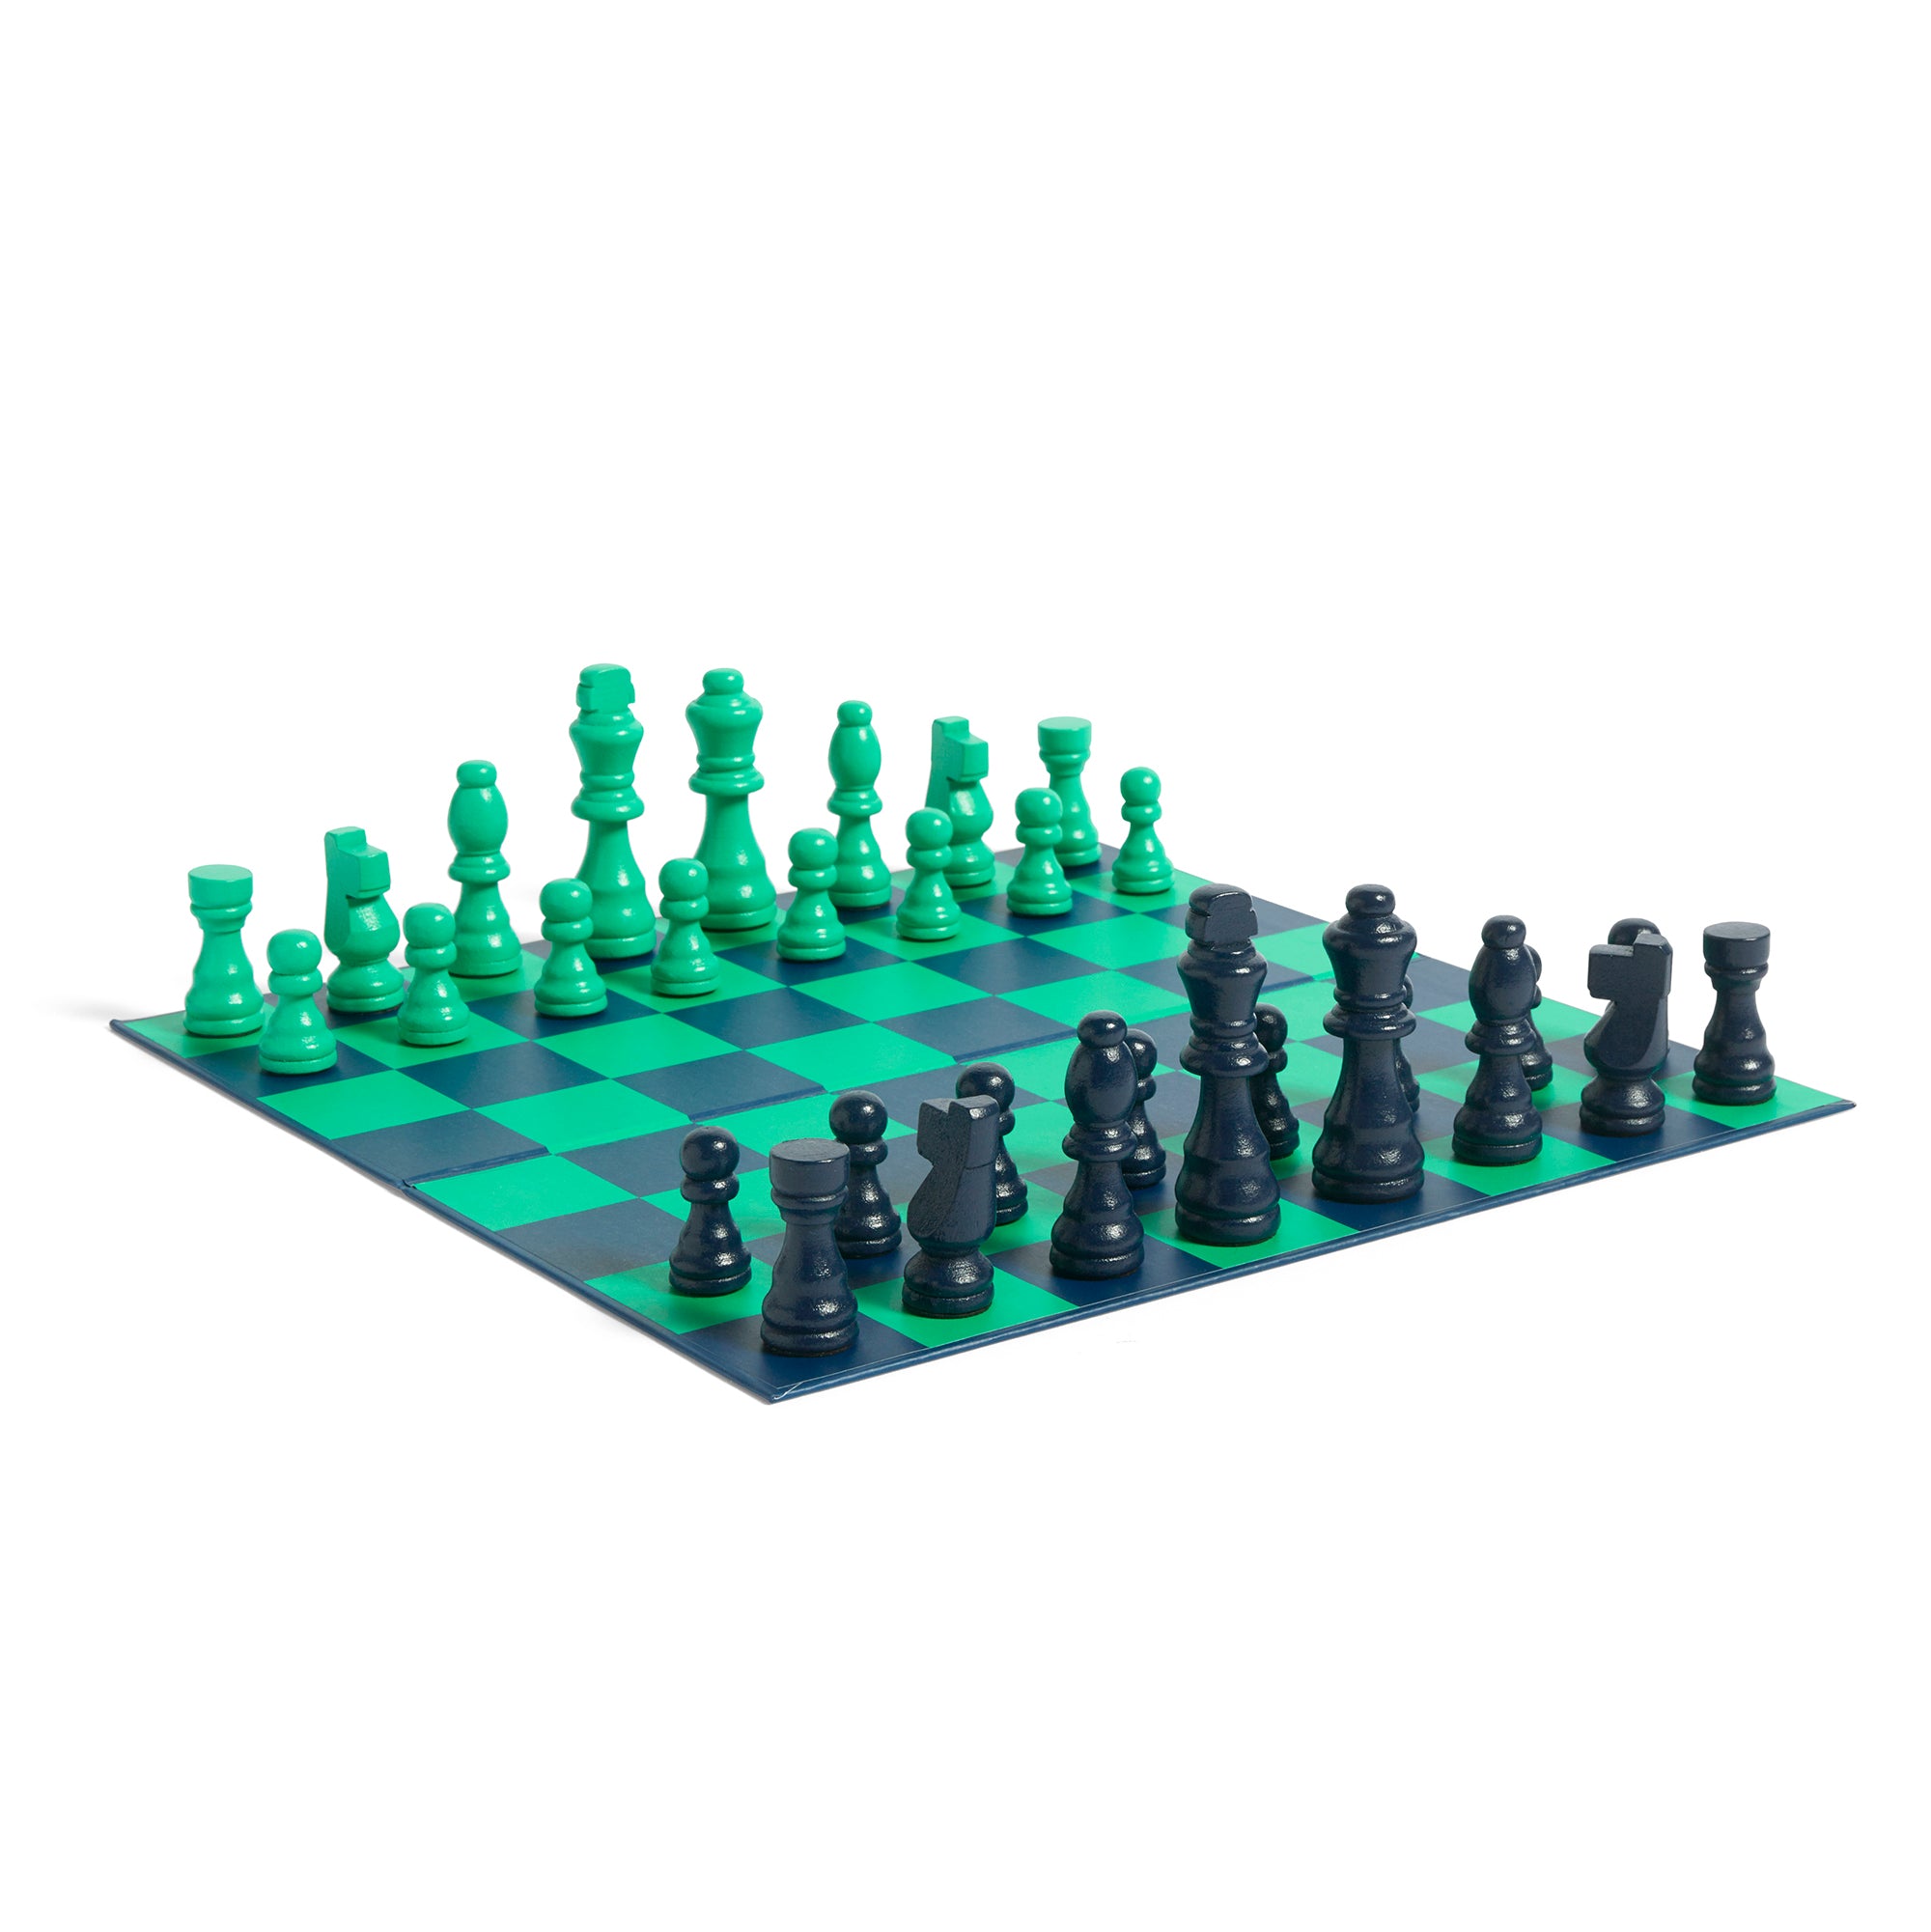 Play Chess, joc de șah